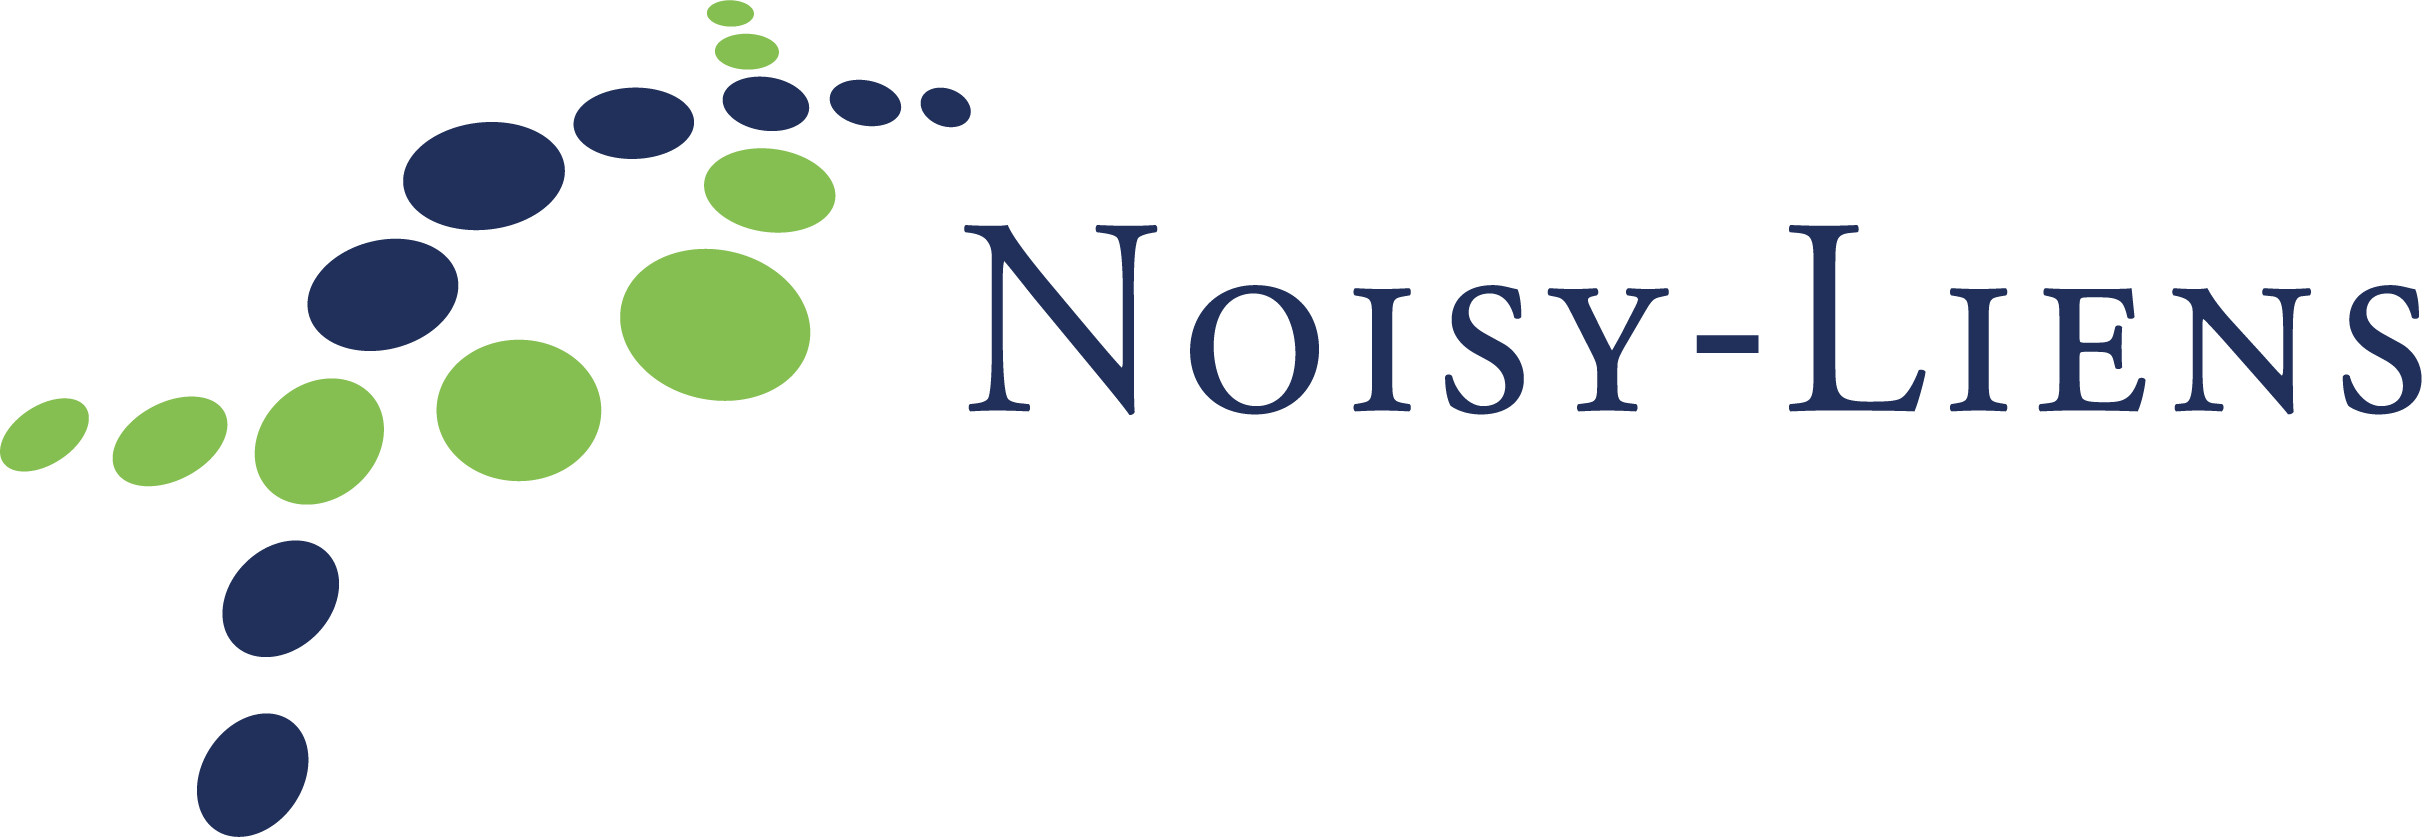 Noisy-Liens